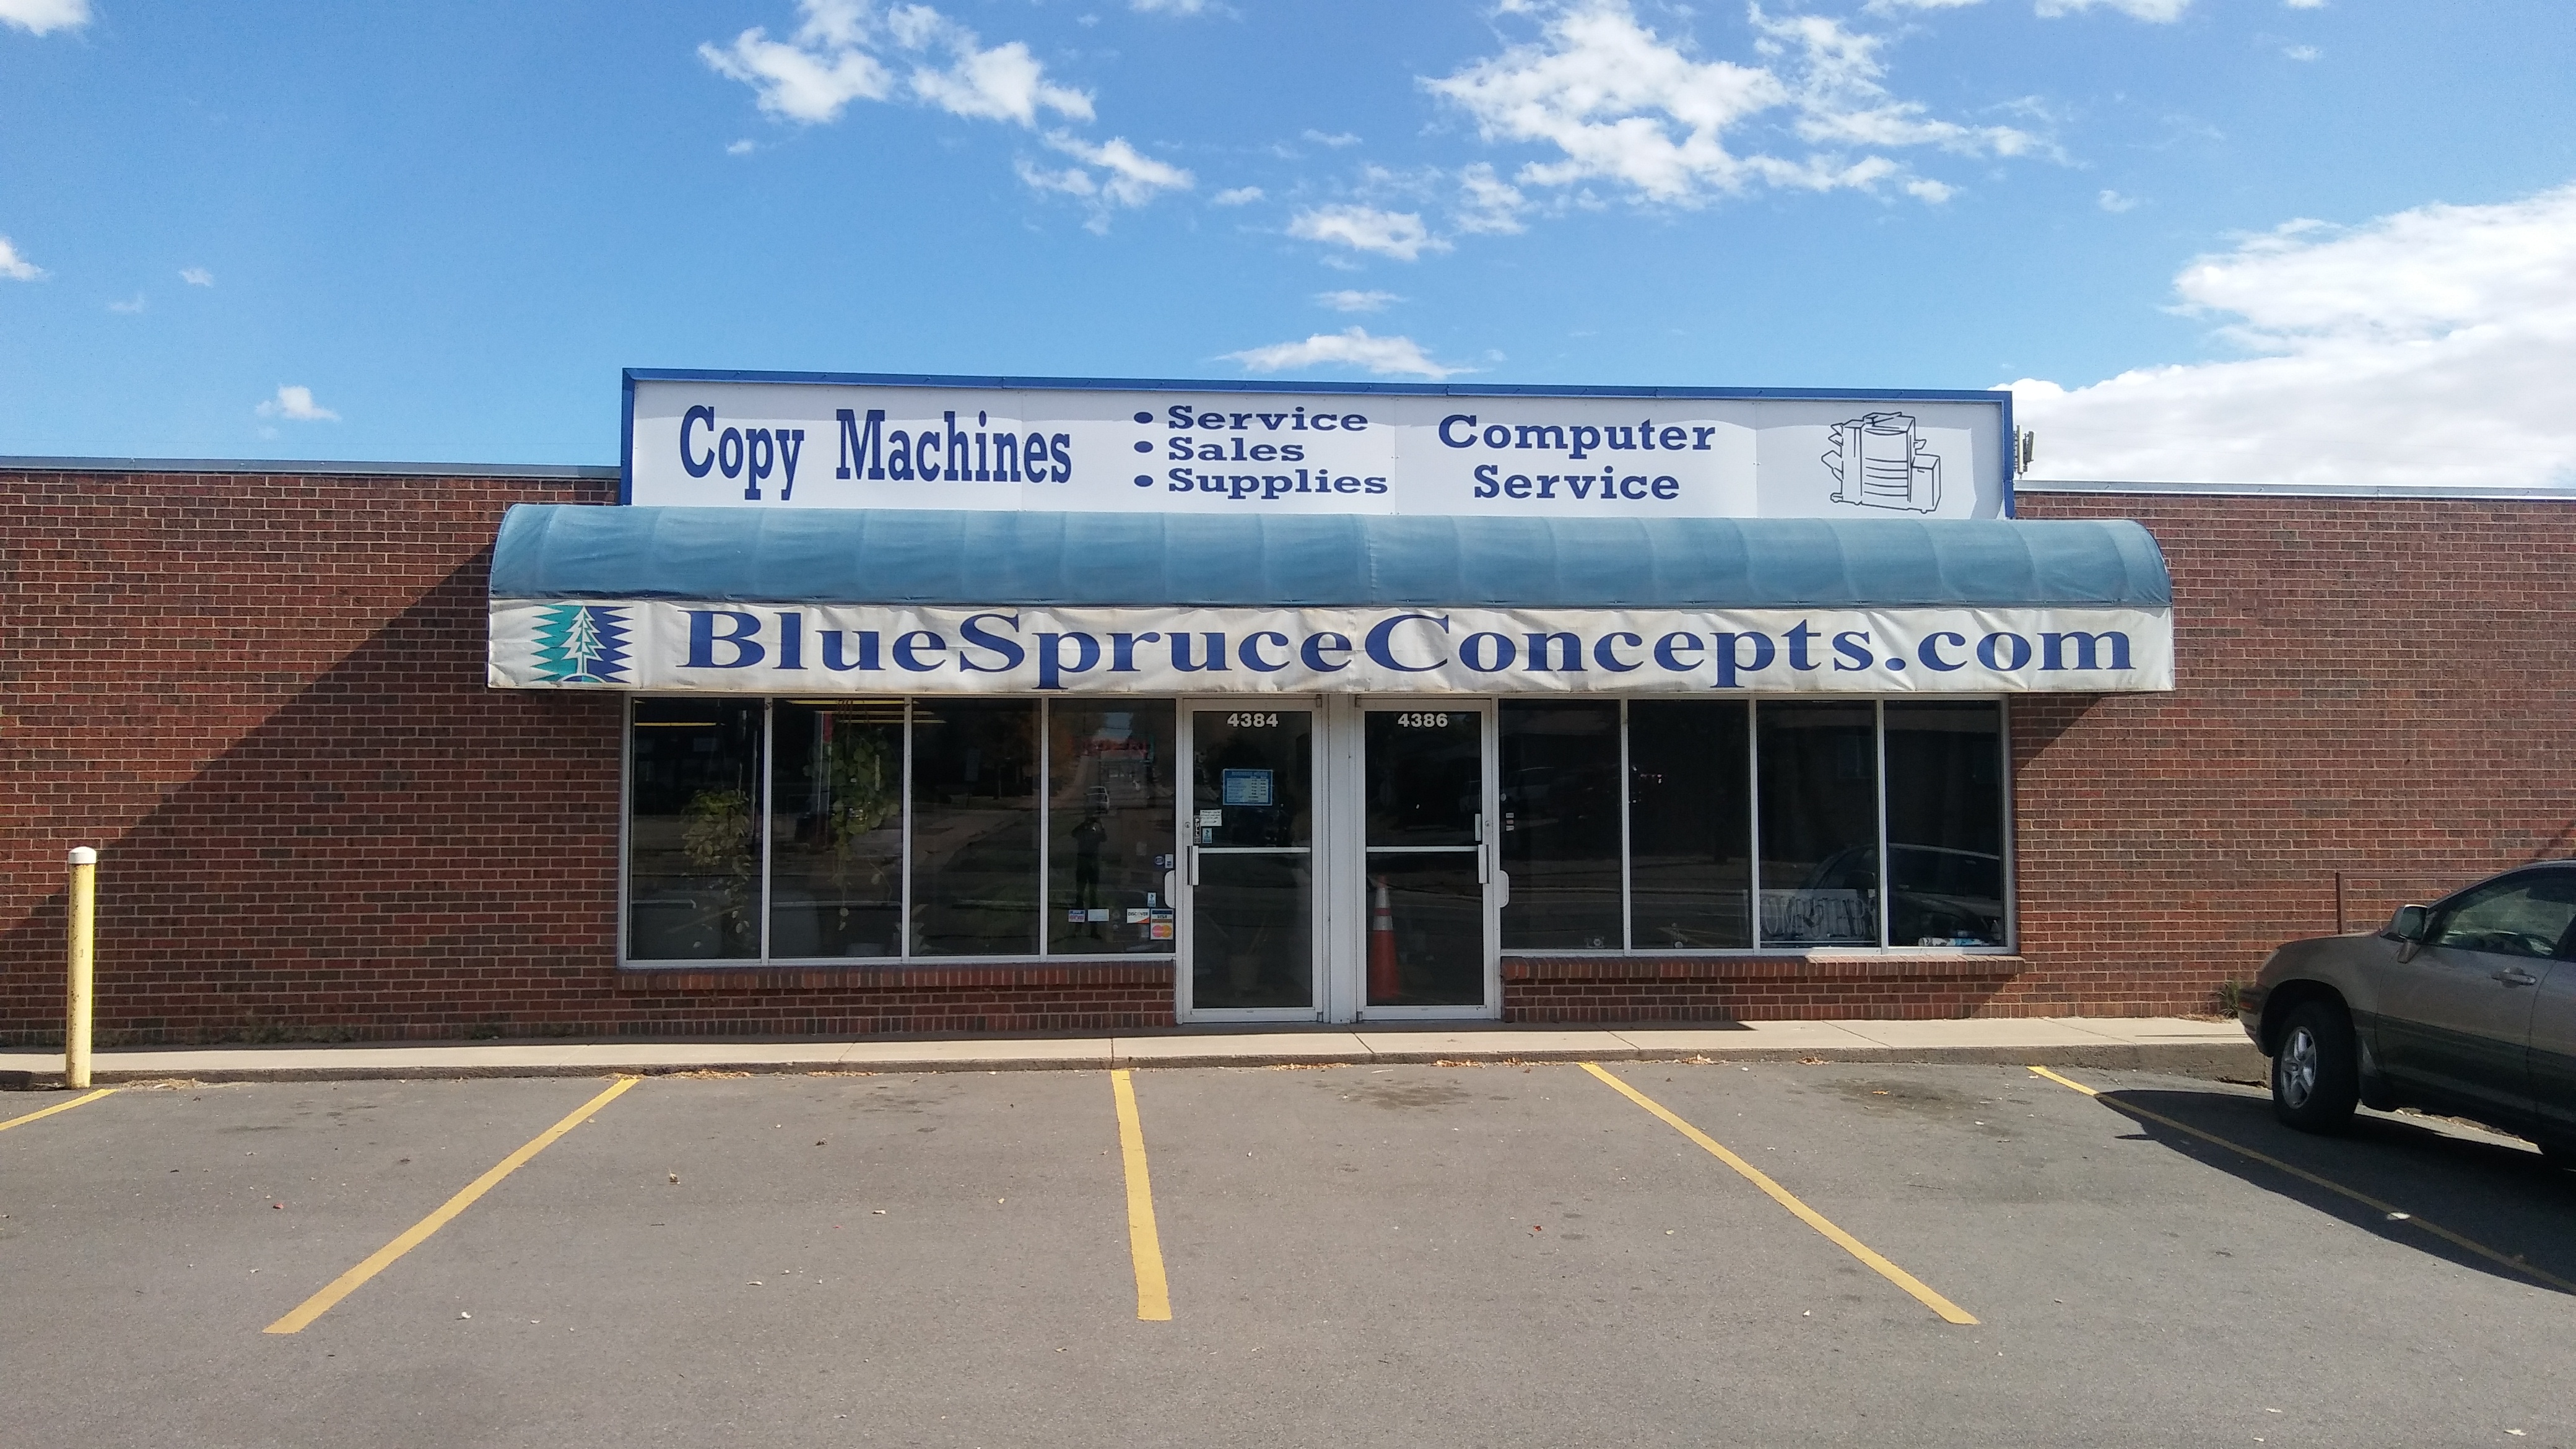 Blue Spruce Concepts, Inc. Photo